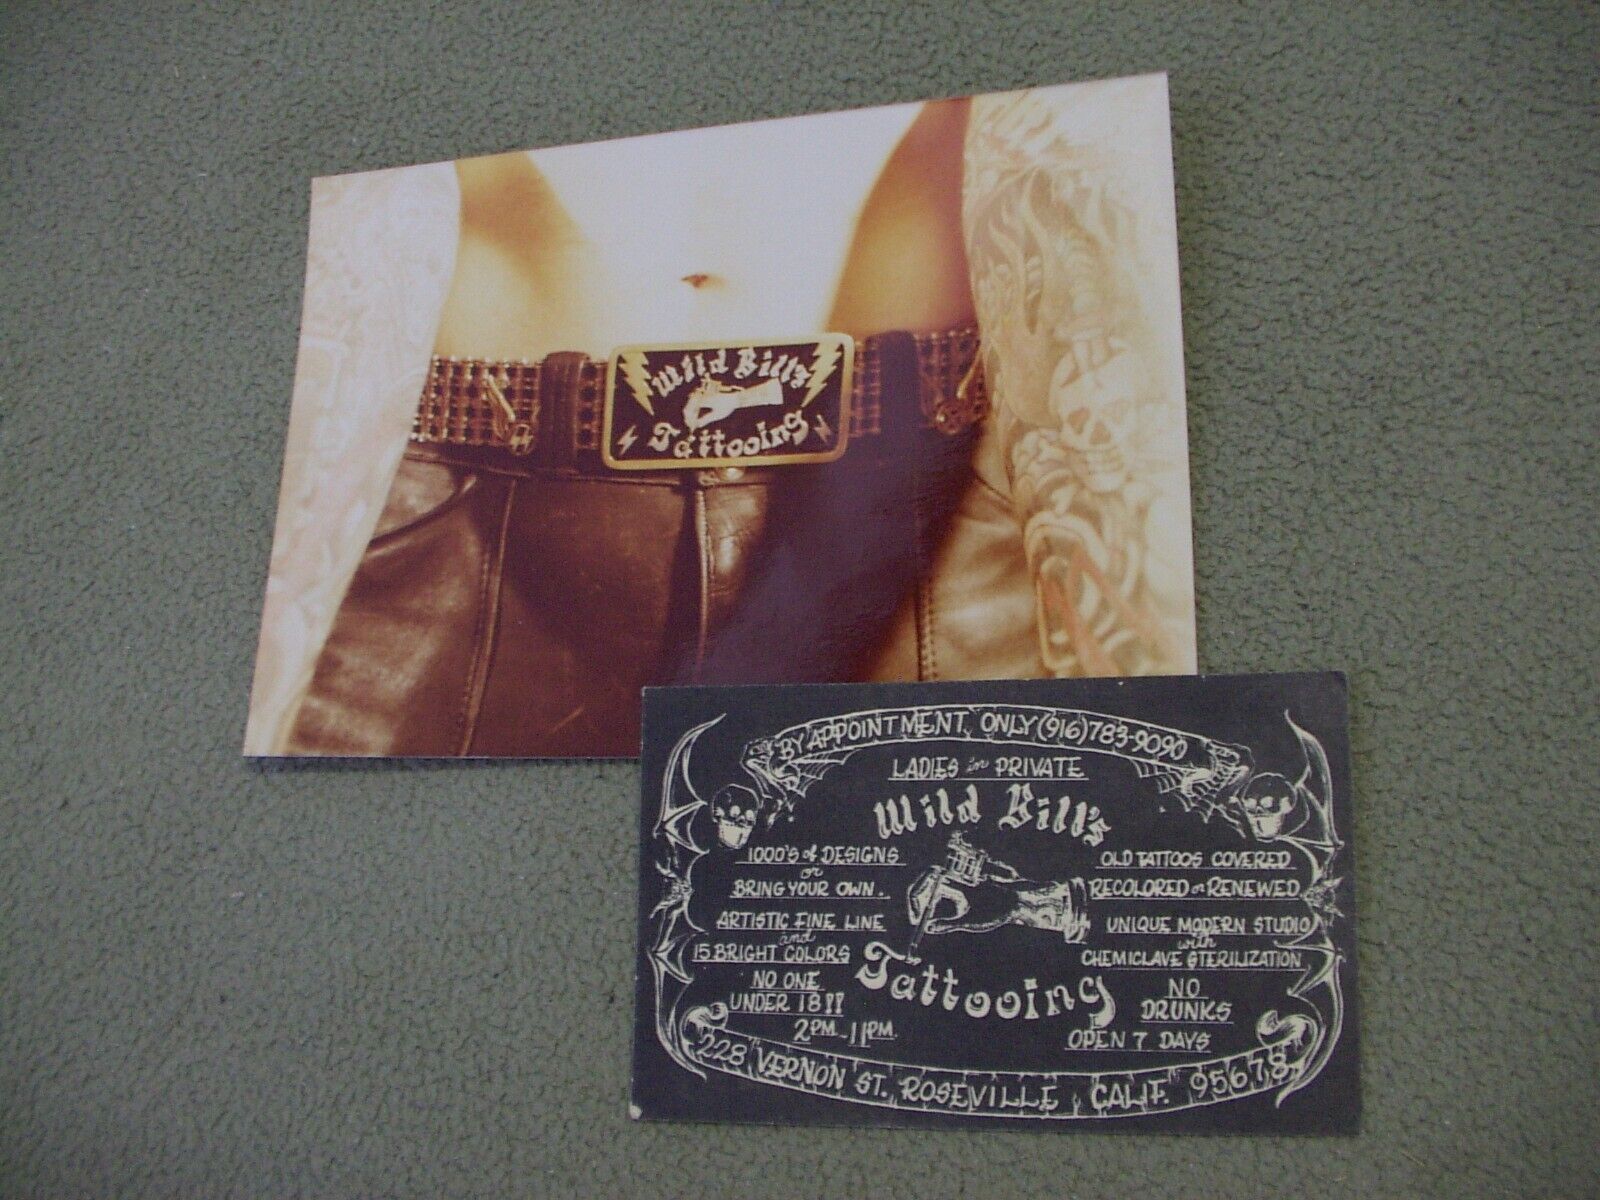 Wild Bill's Tattooing belt buckle original photo print,1979 4th World Convention